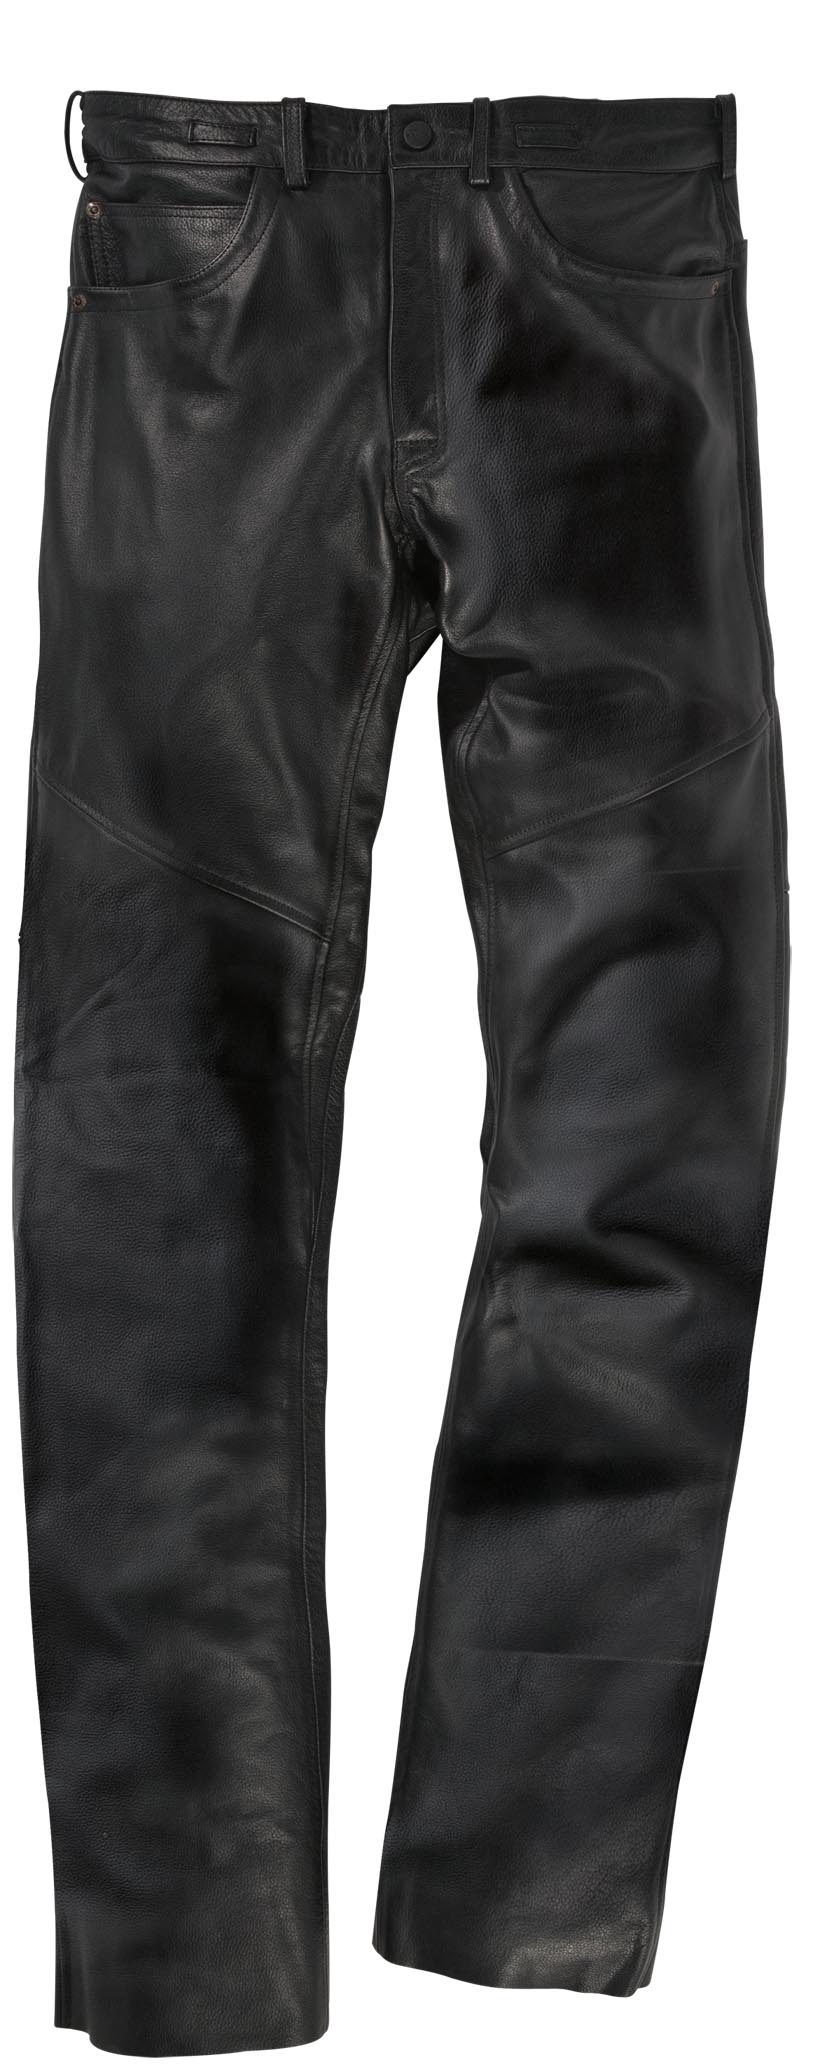 Pantalon-Jean cuir femme Falcon DIFI - noir